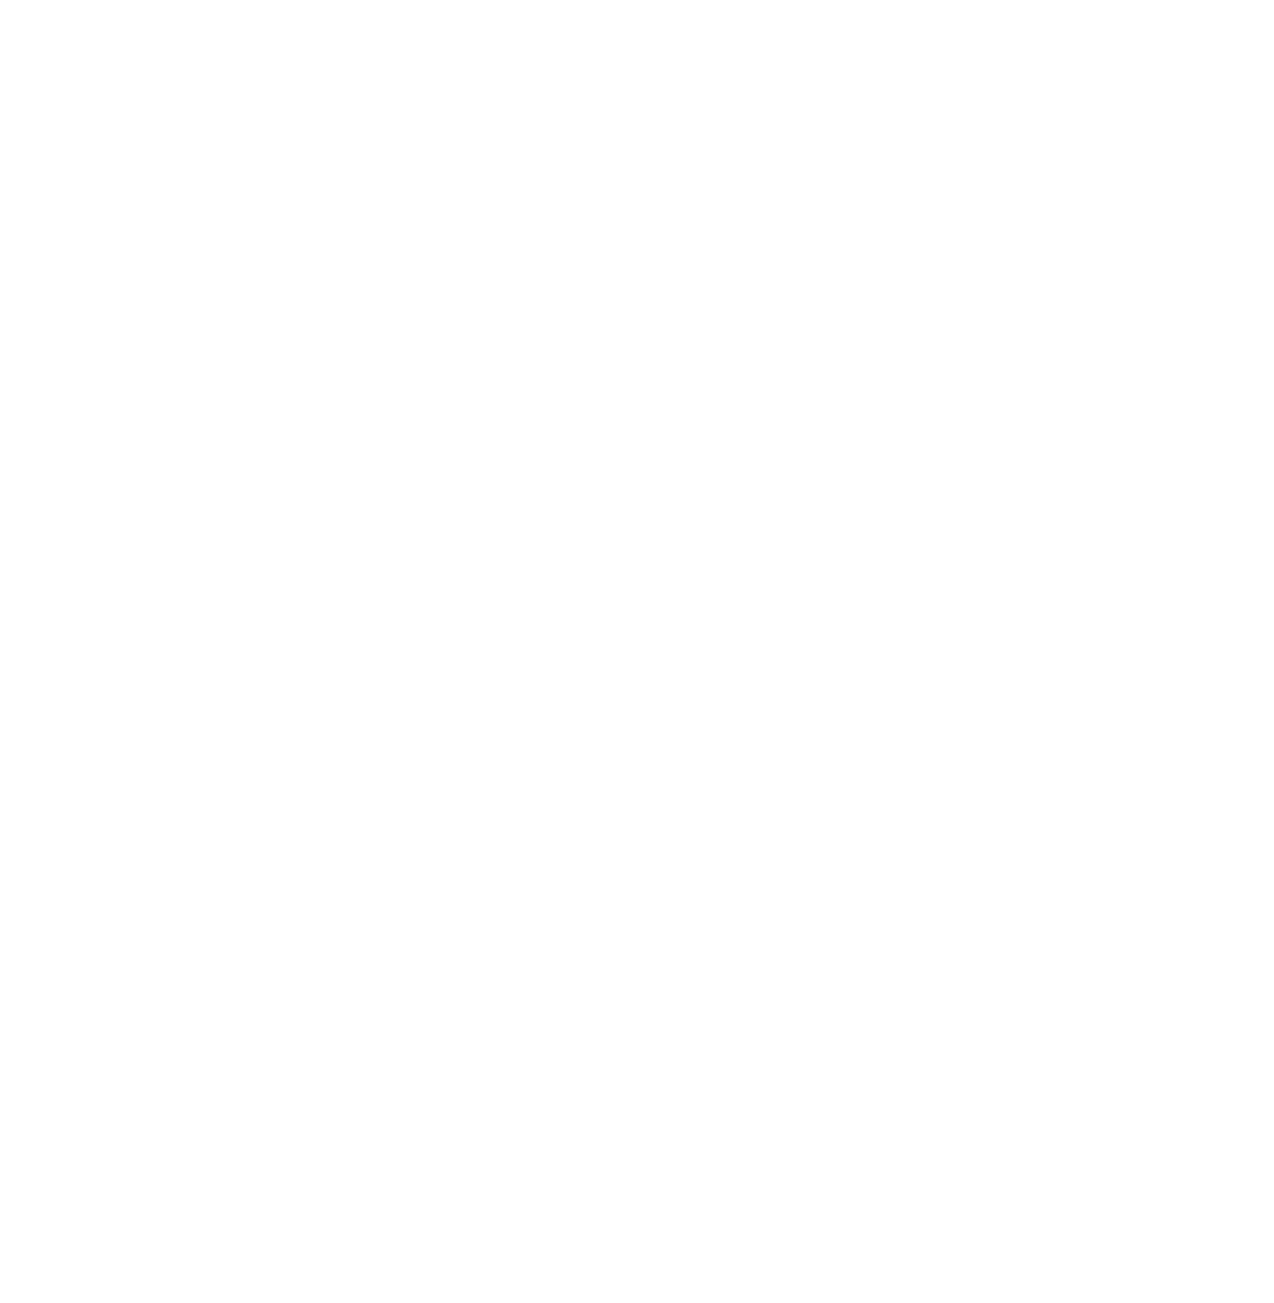 Bus Hostel